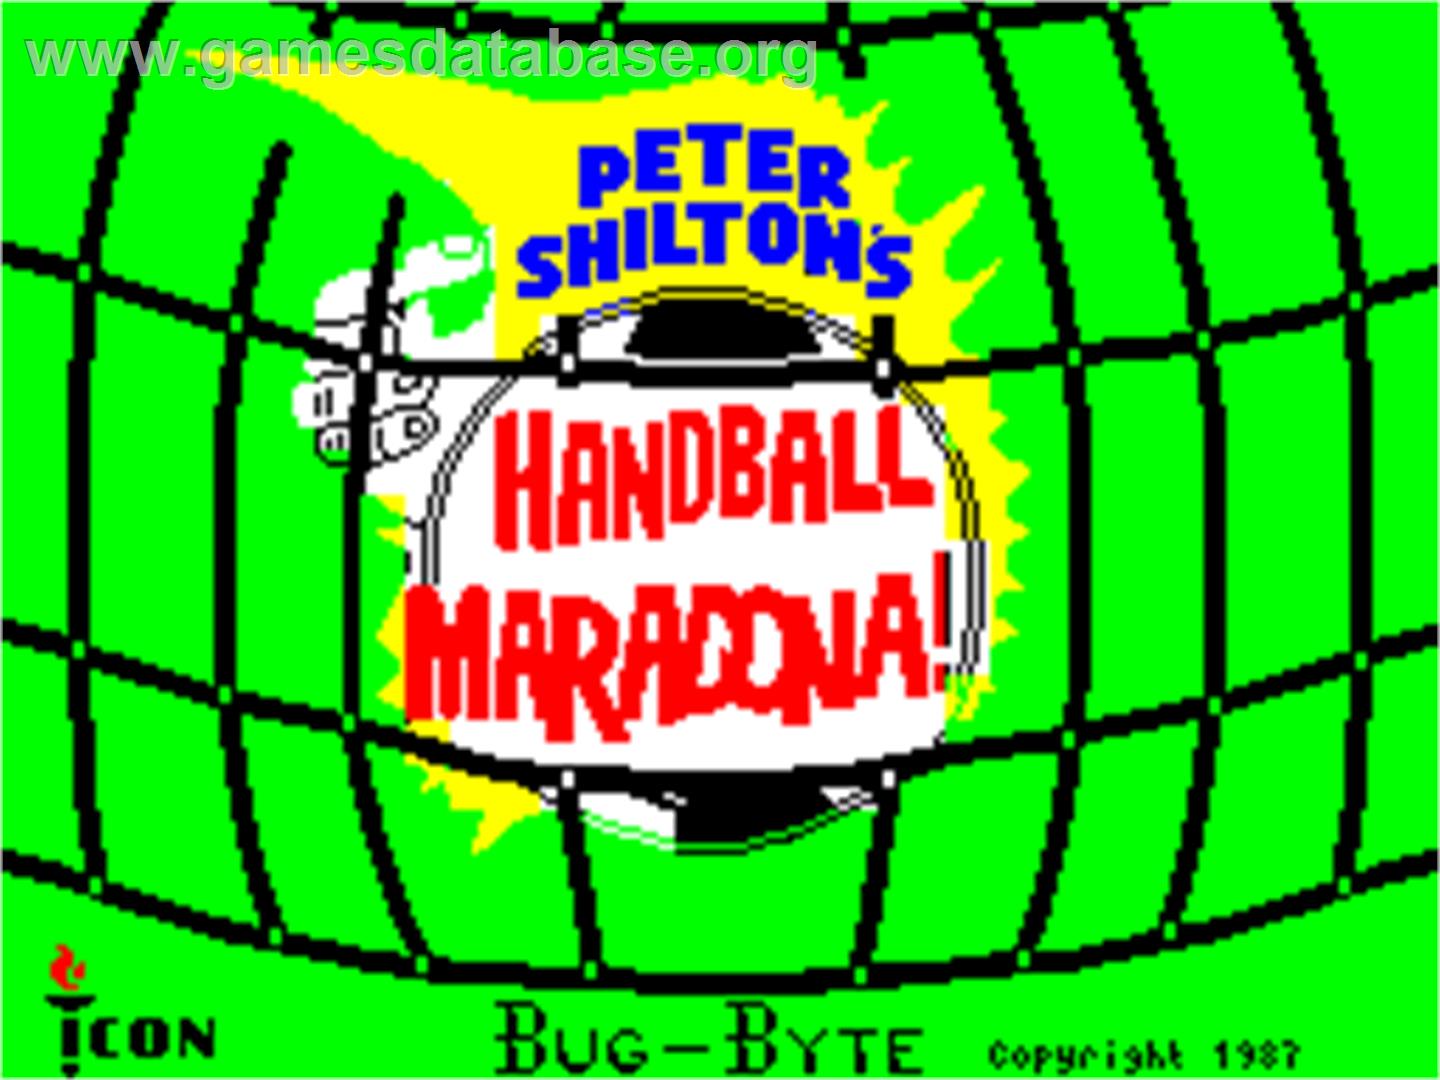 Peter Shilton's Handball Maradona! - Sinclair ZX Spectrum - Artwork - Title Screen